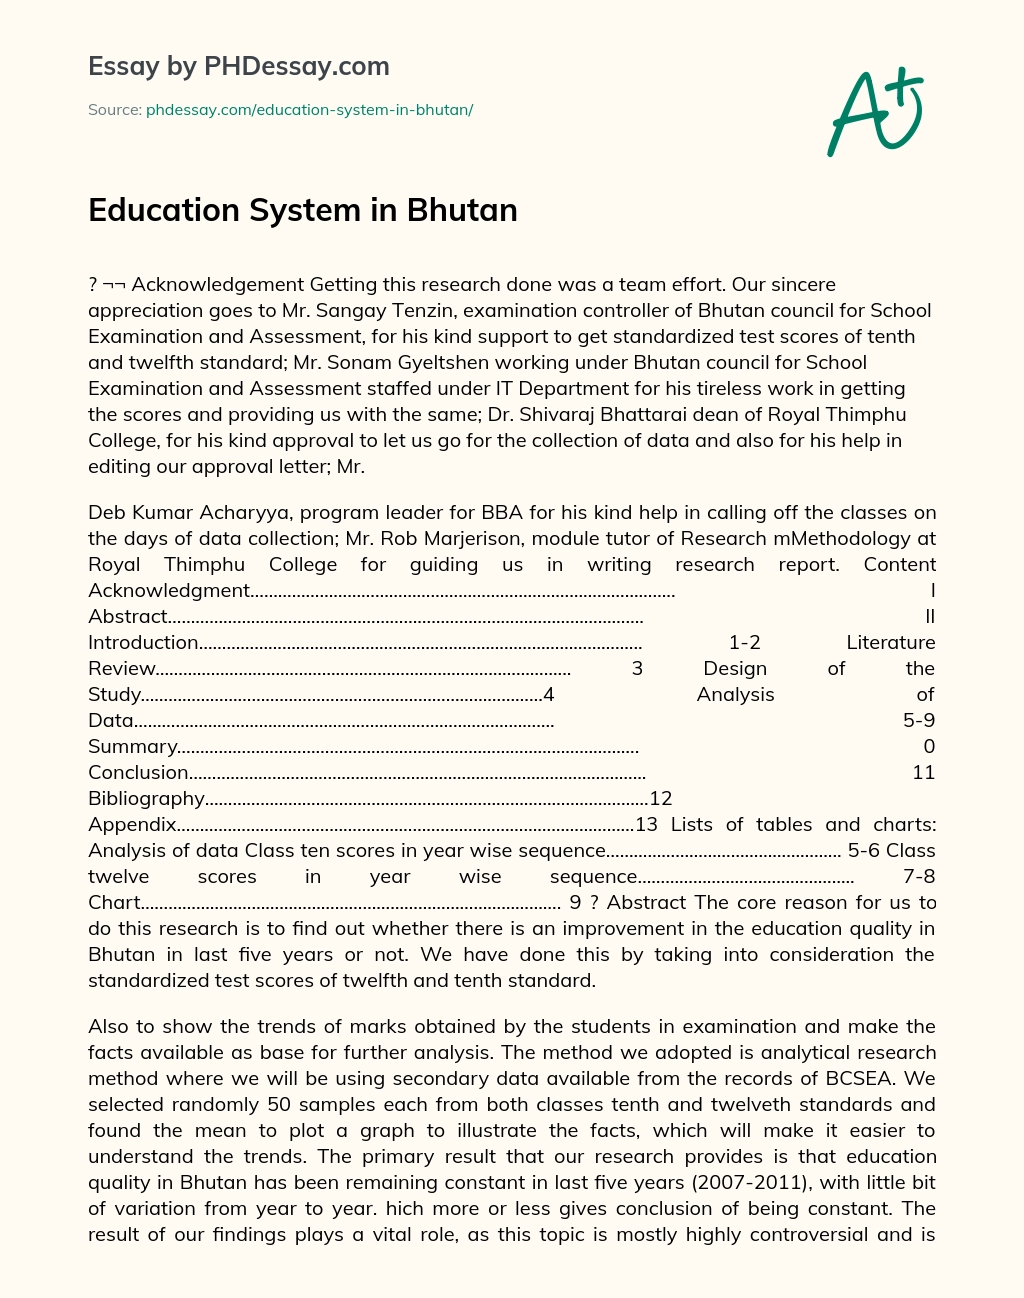 Education System in Bhutan essay